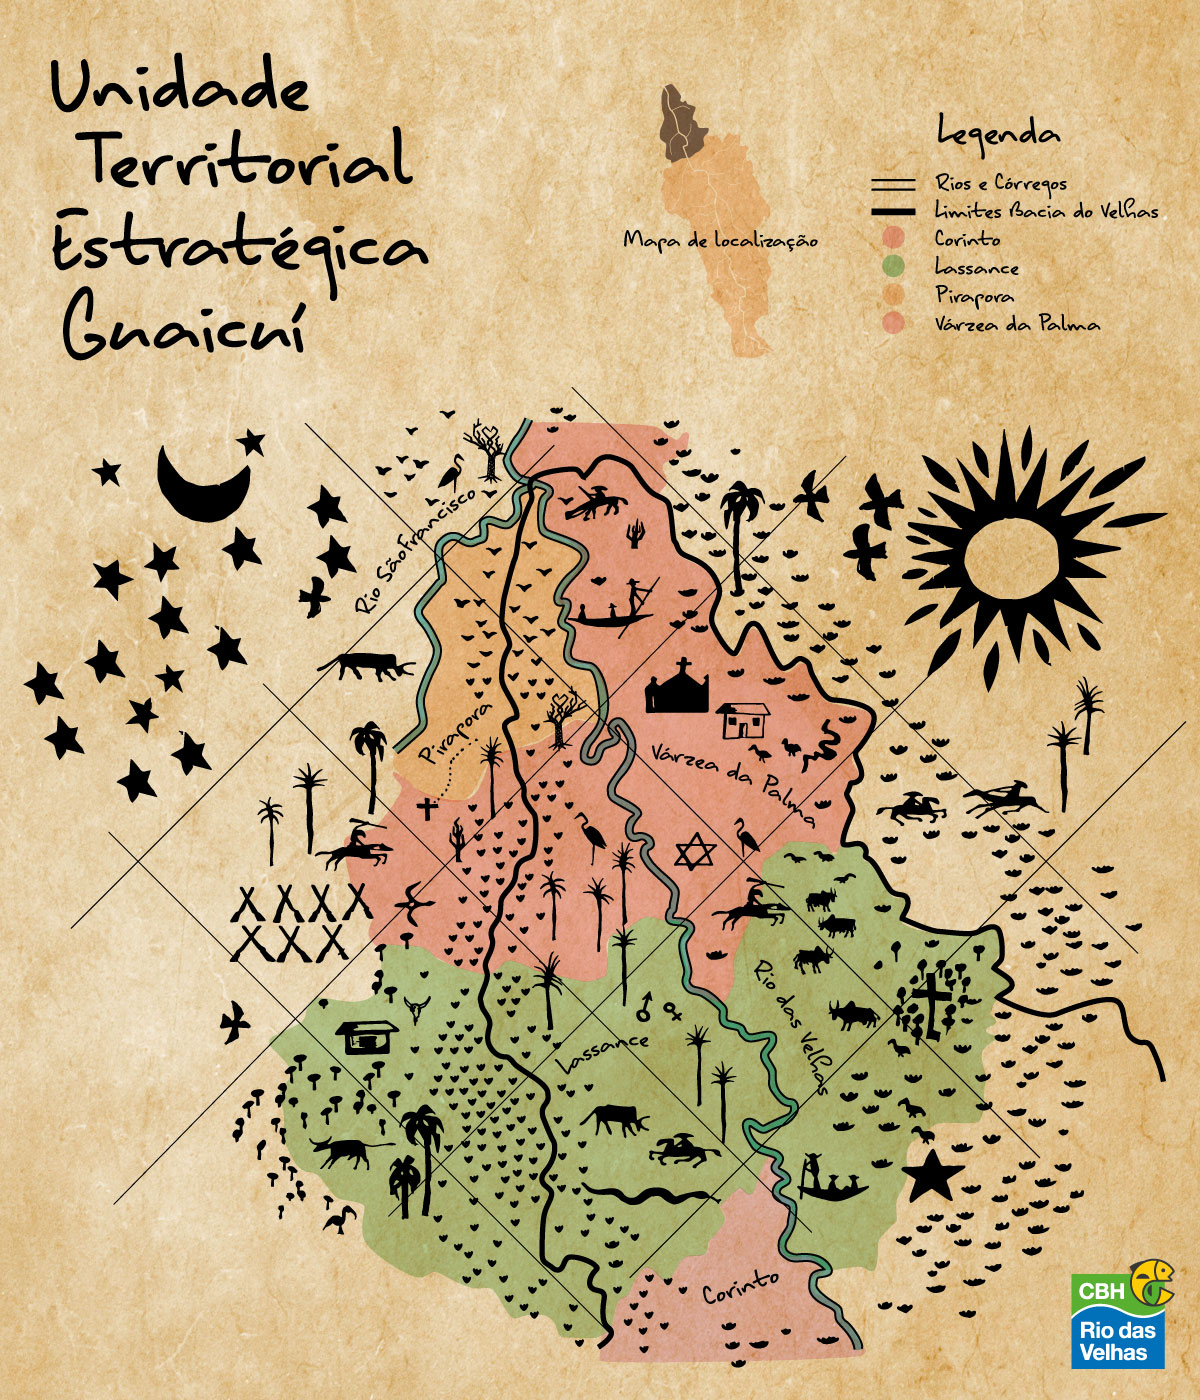 Mapa da Unidade Territorial Estratégica Guaicuí